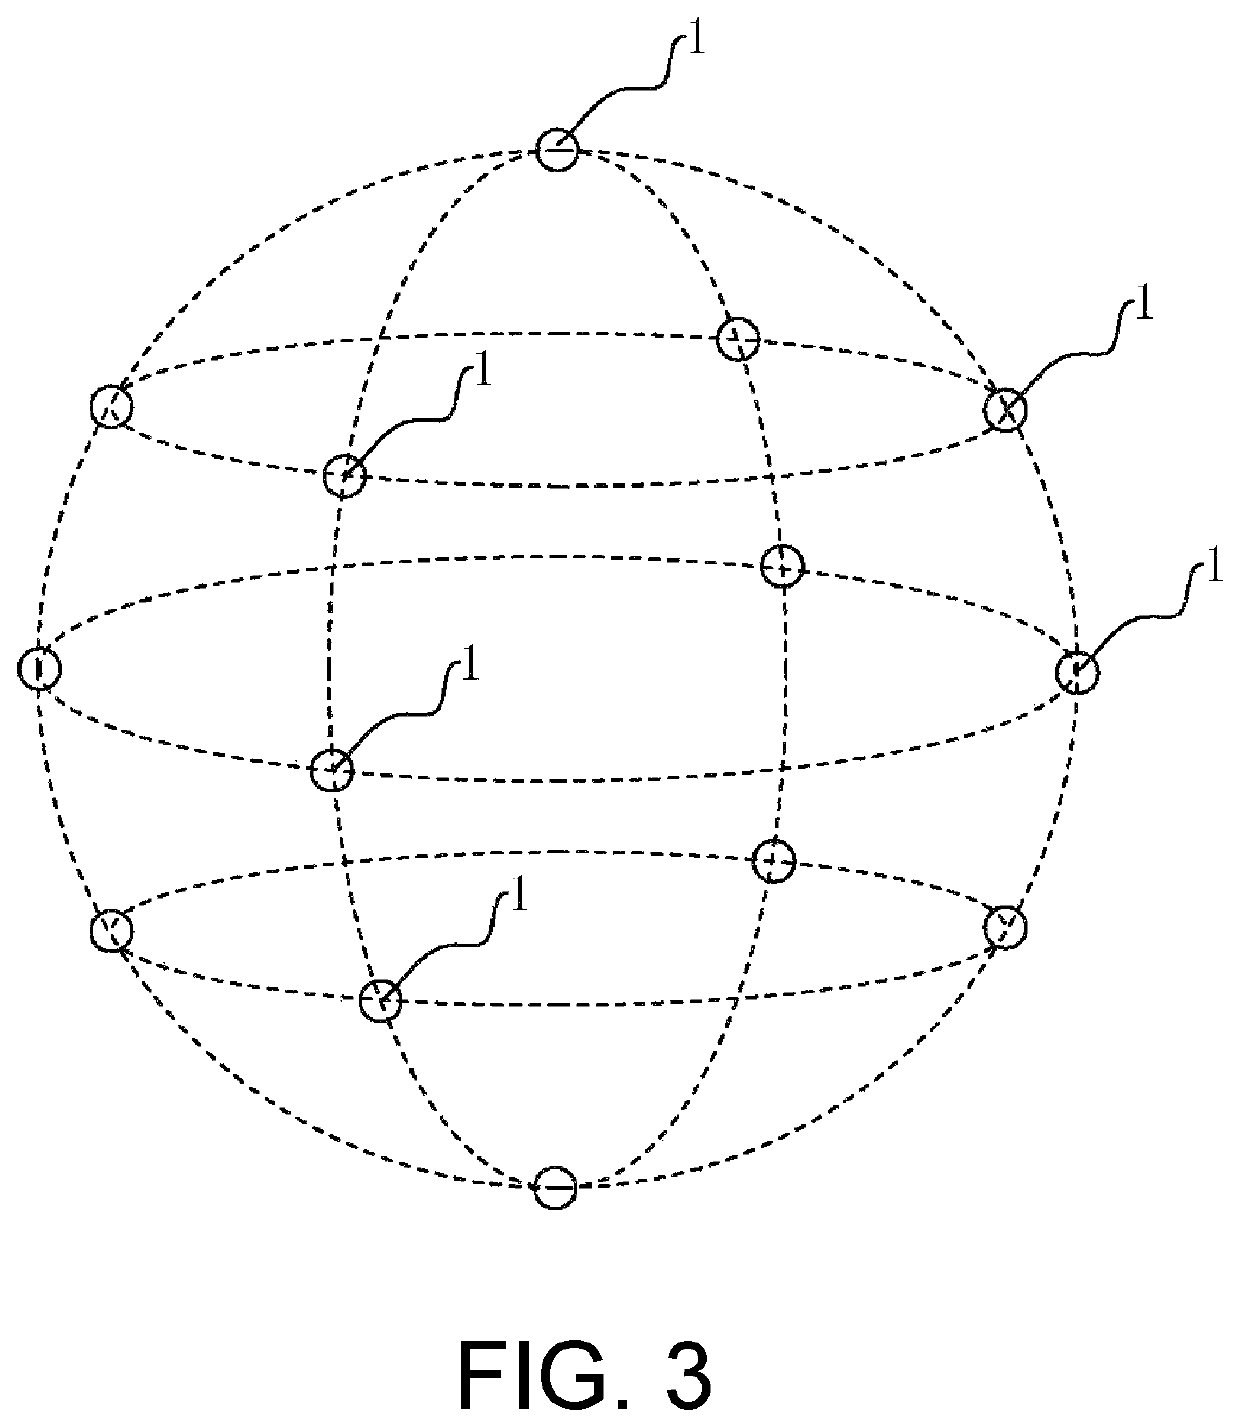 Polygonal spherical space sampling device